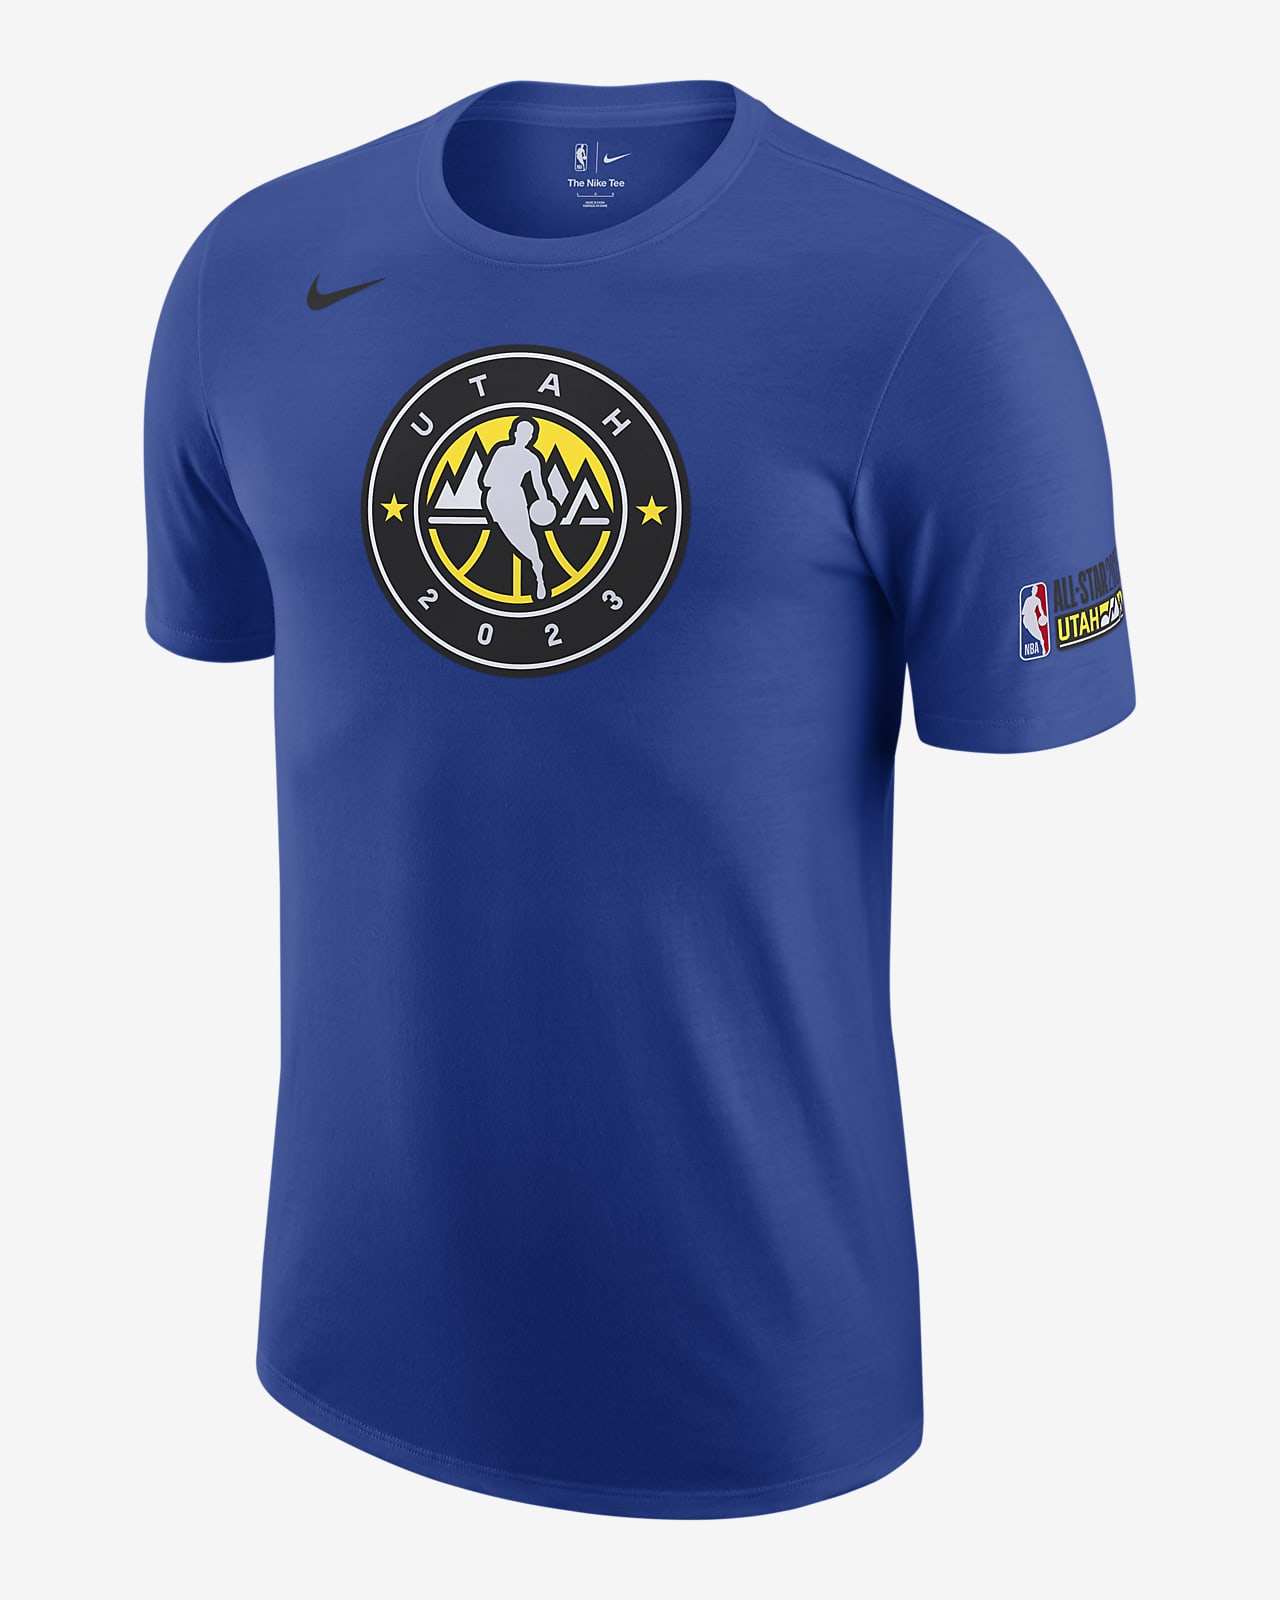 All-Star Essential Men's Nike NBA T-Shirt